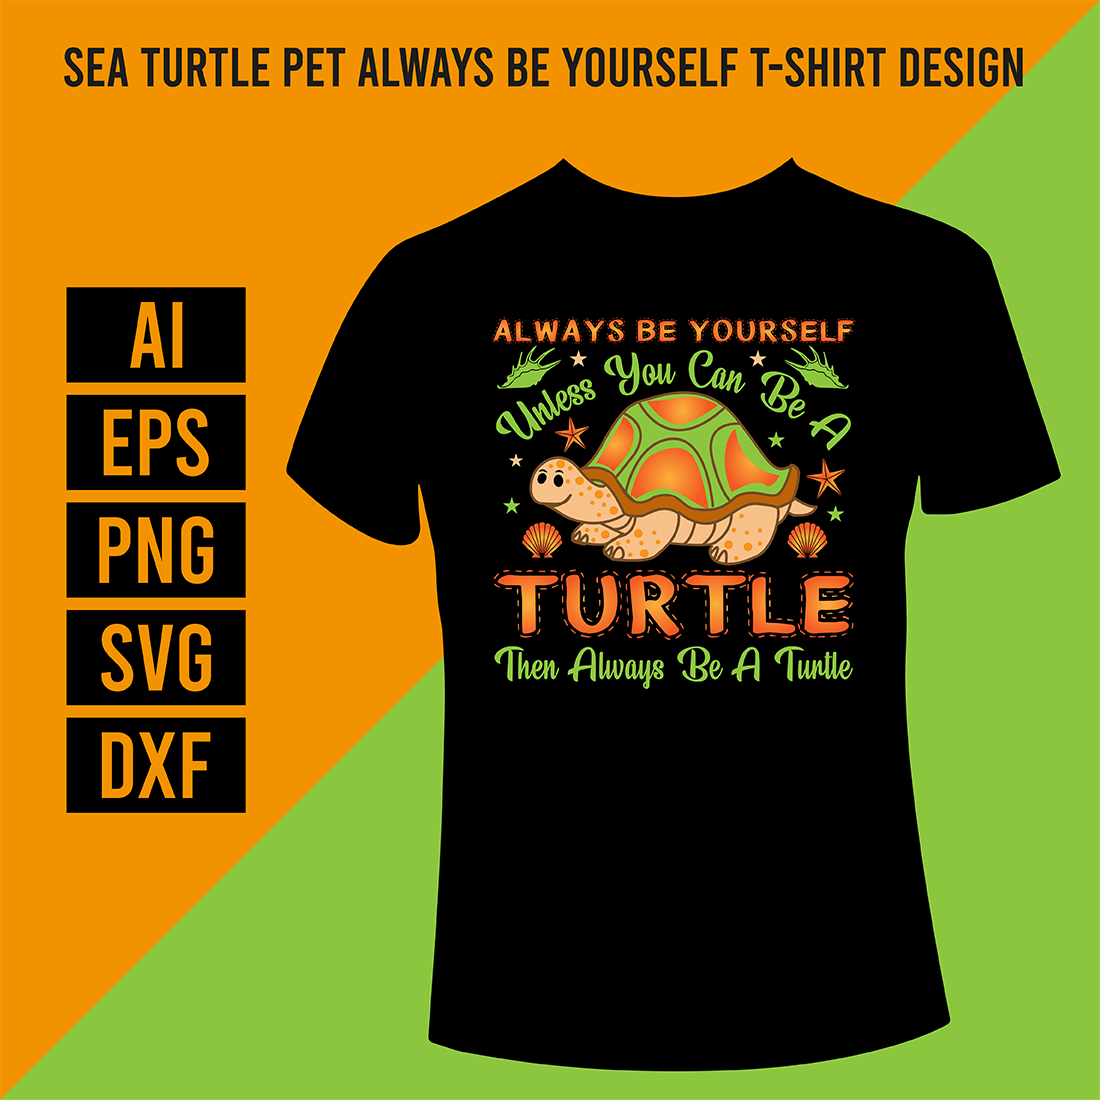 Sea Turtle Pet Always Be Yourself T-Shirt Design